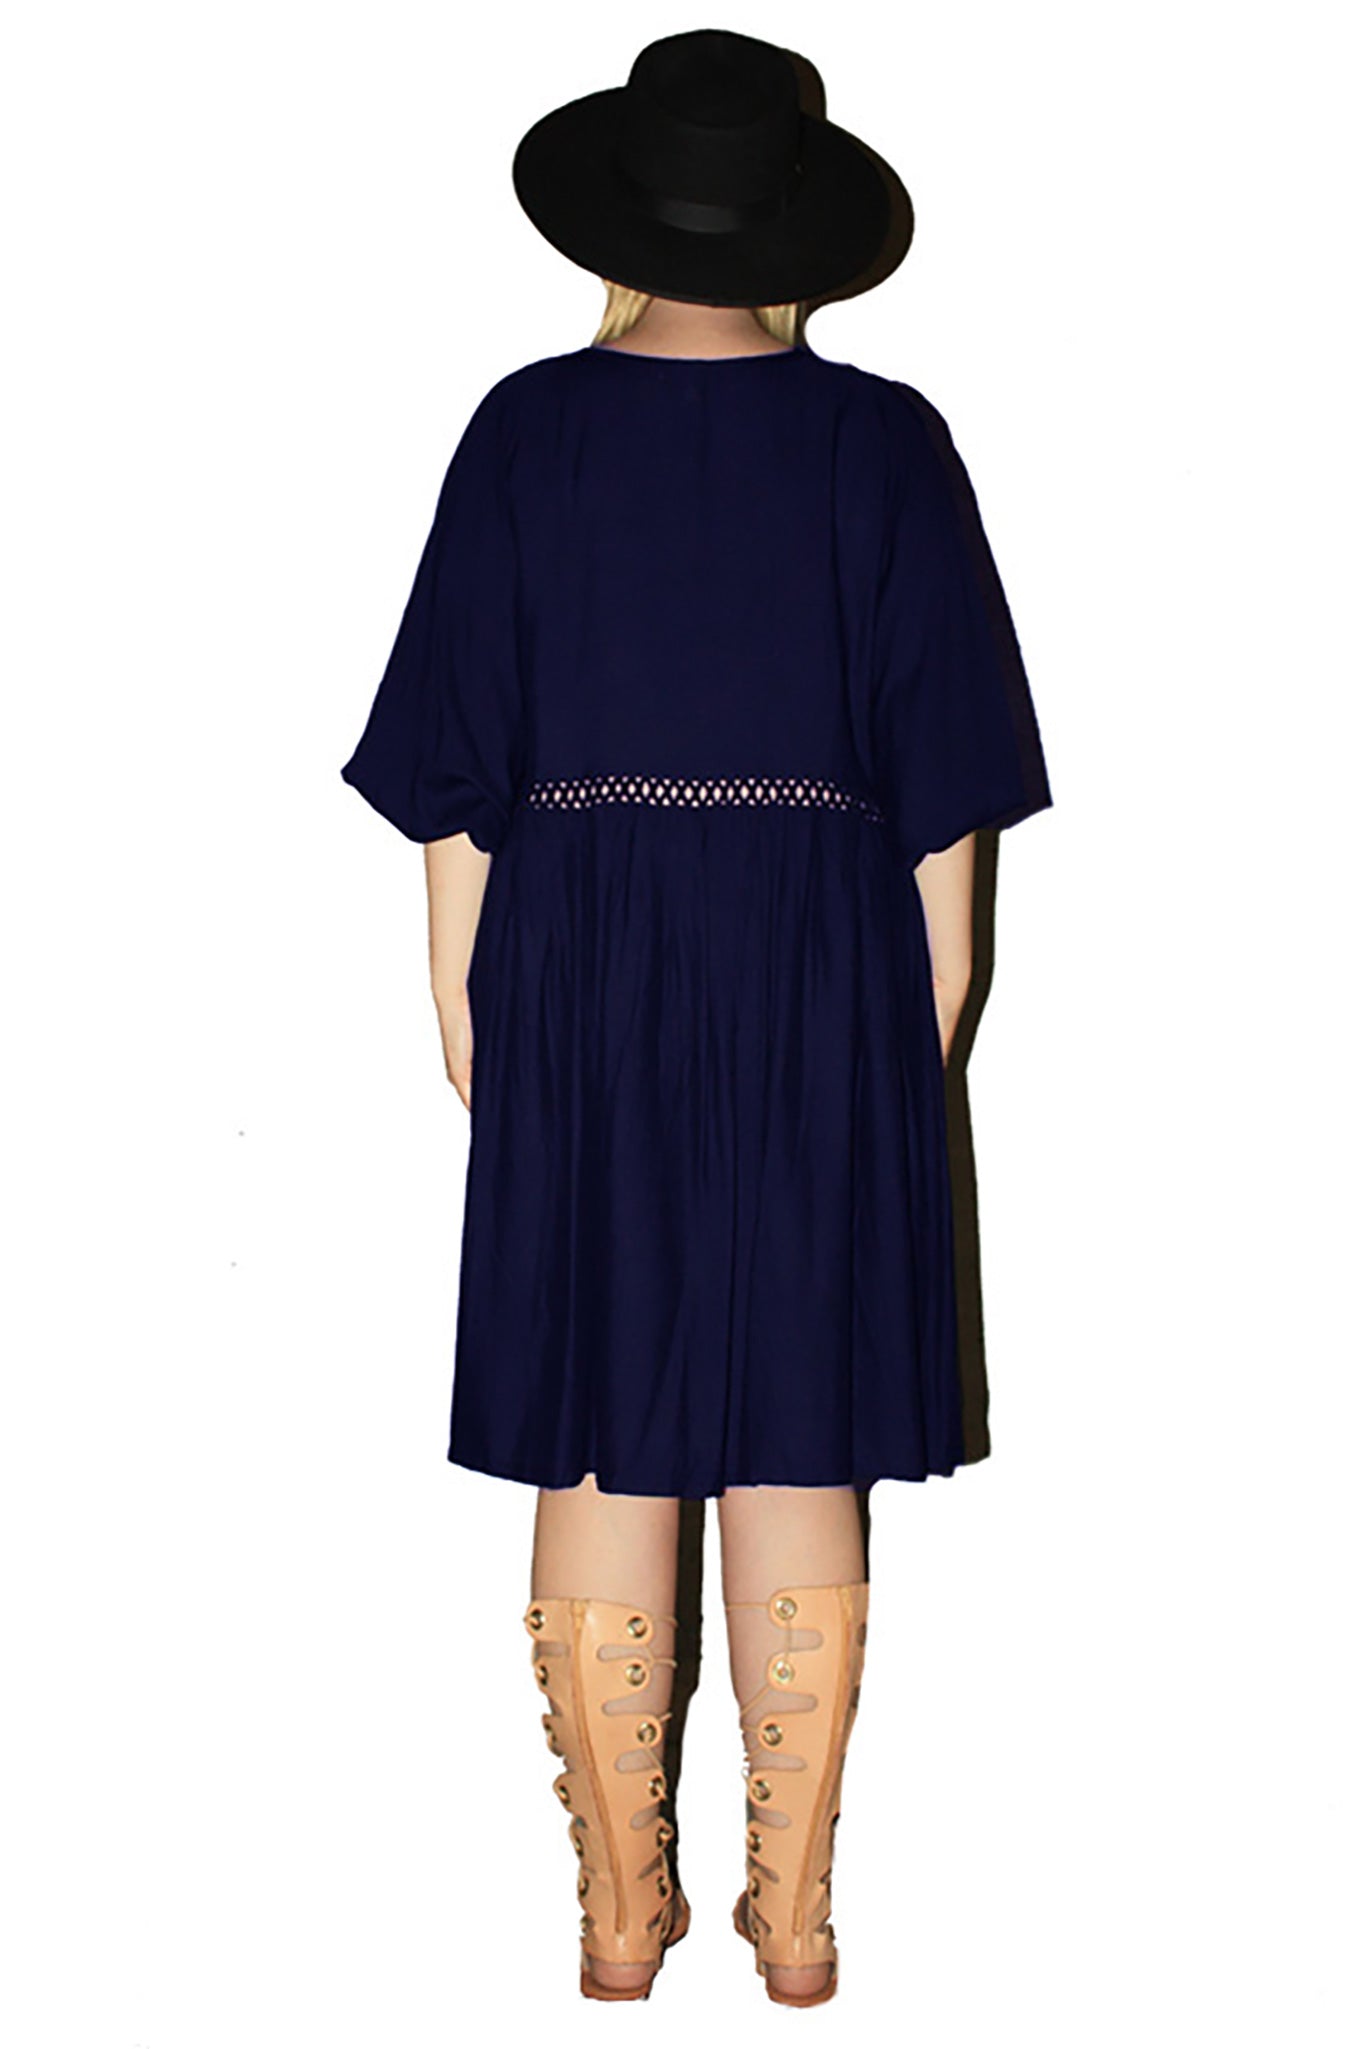 Dinjuan Divine Dress - Navy: versatile dress for Sizes 8-18